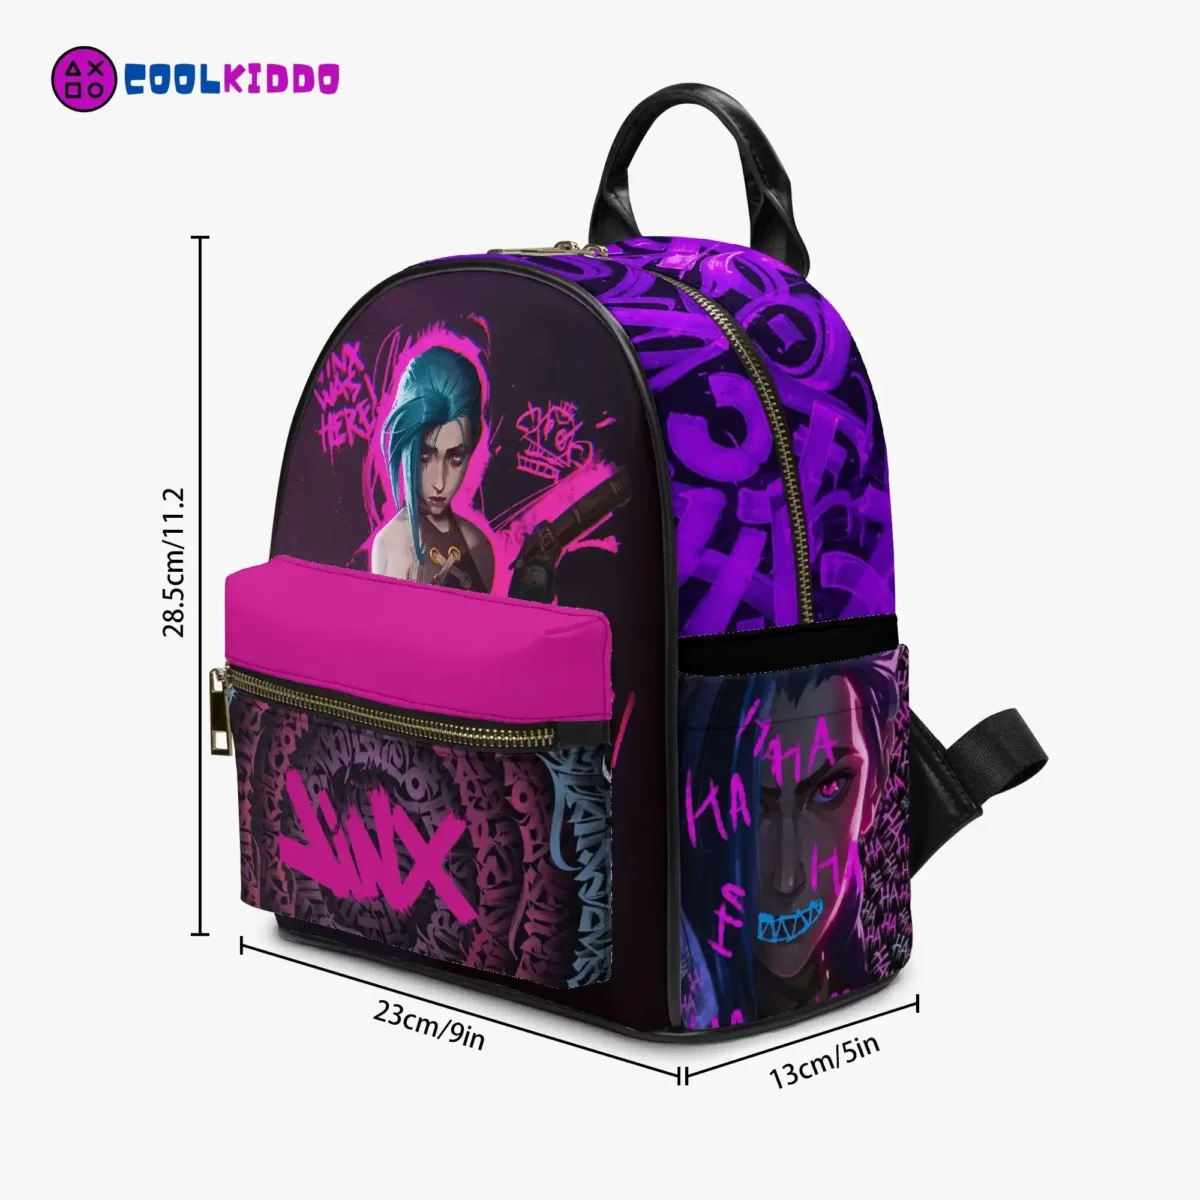 Jinx Character LoL Art Graffiti Style Mini Leather Backpack for Girls/Youth Cool Kiddo 20